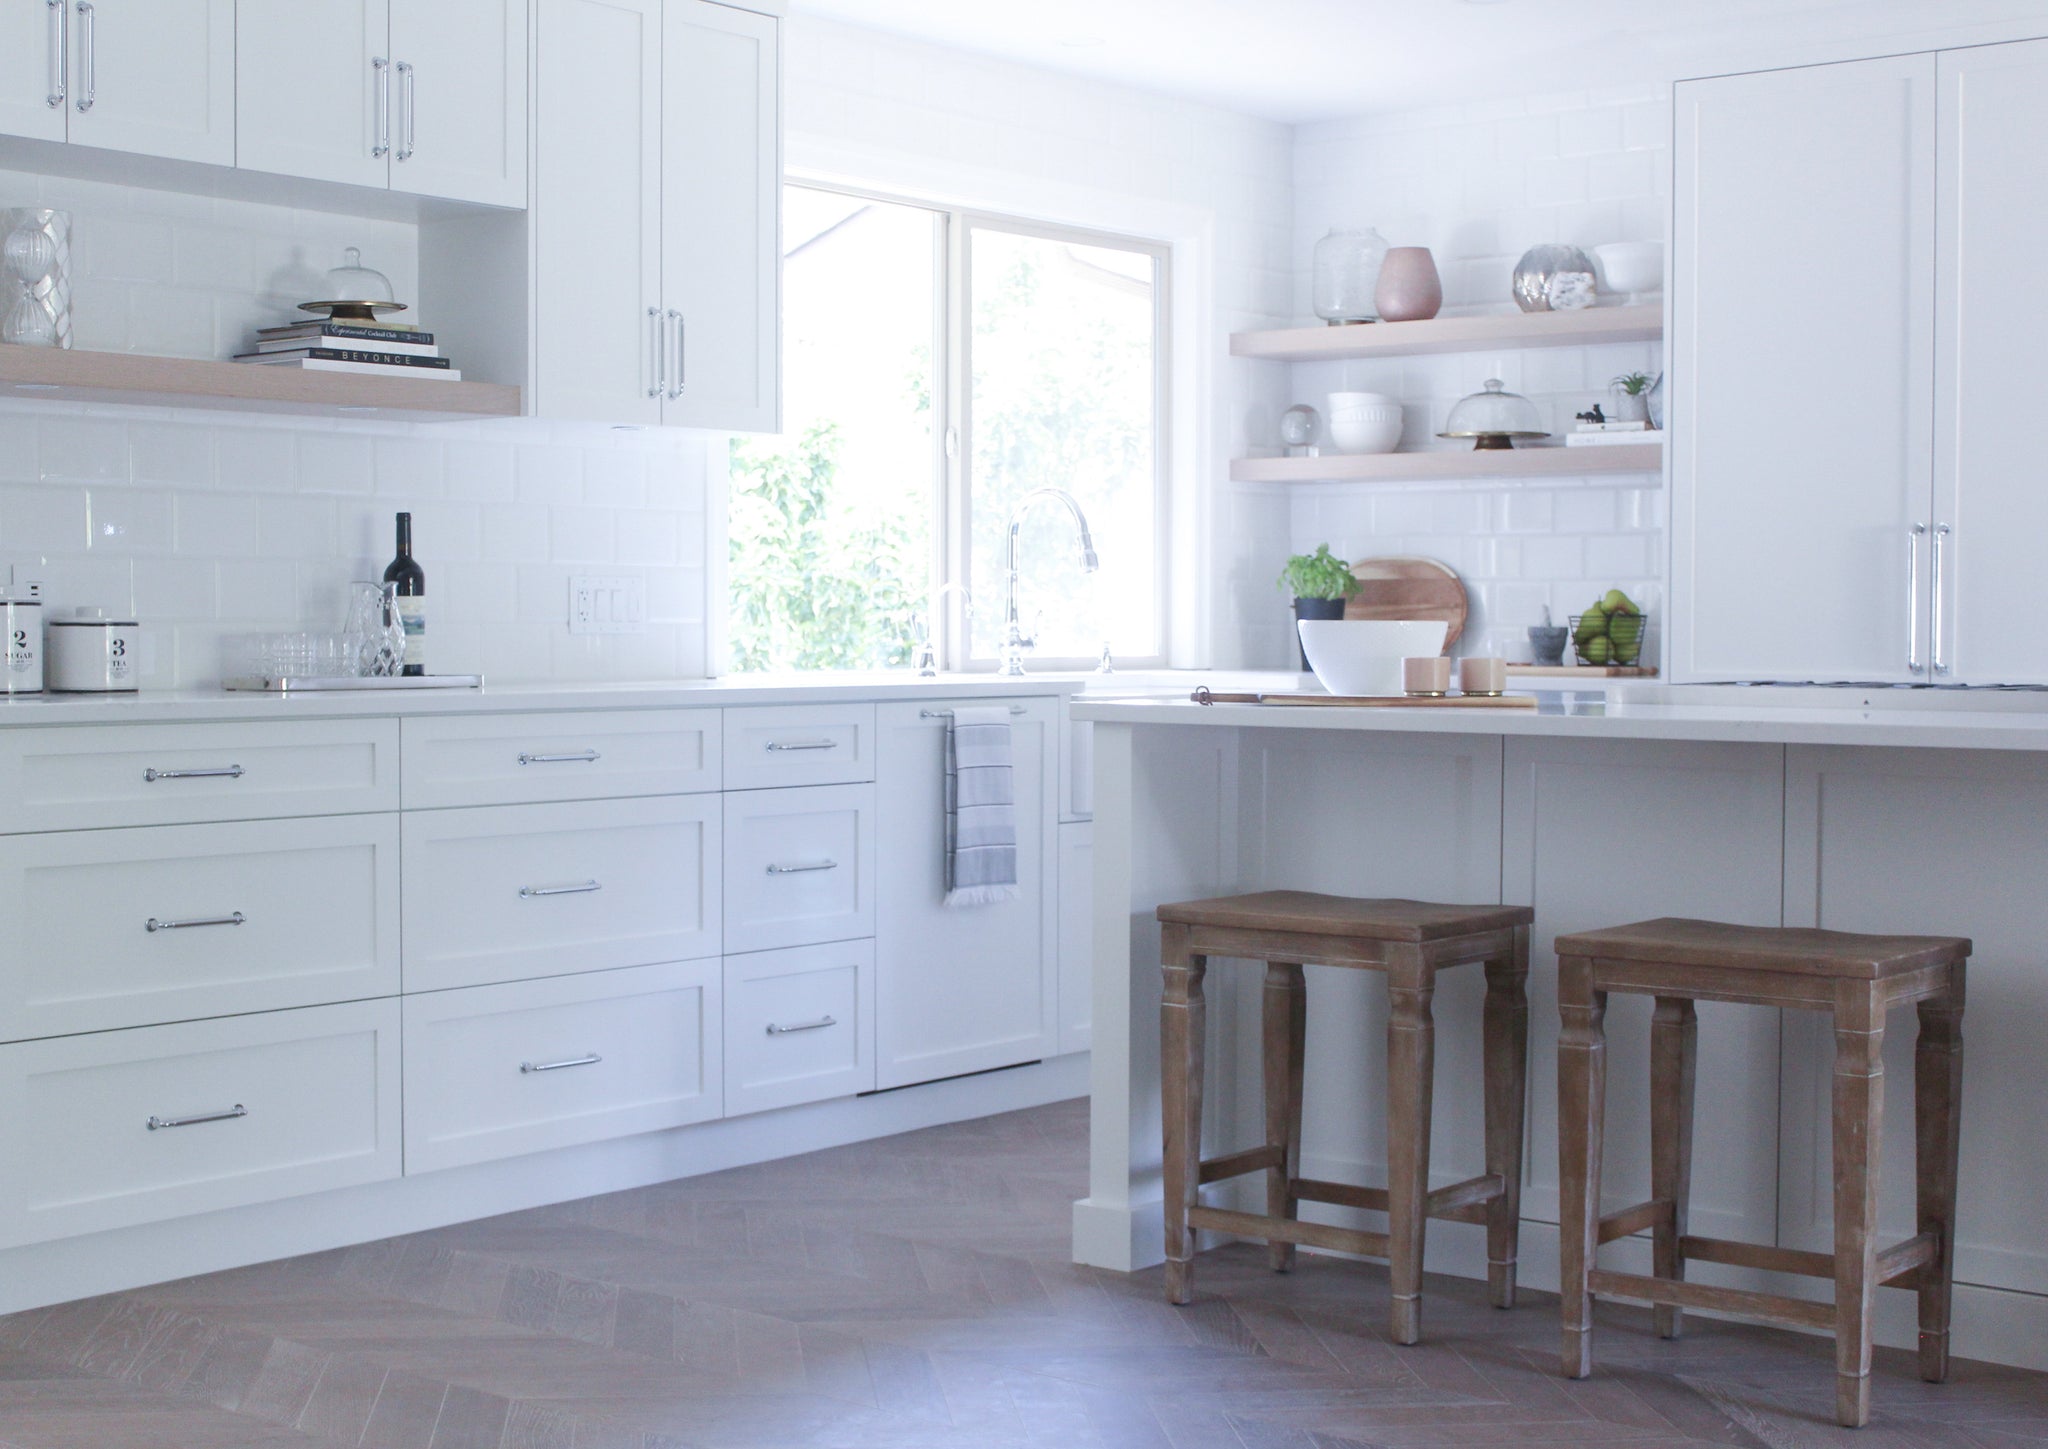 AR Interiors residential kitchen interior design